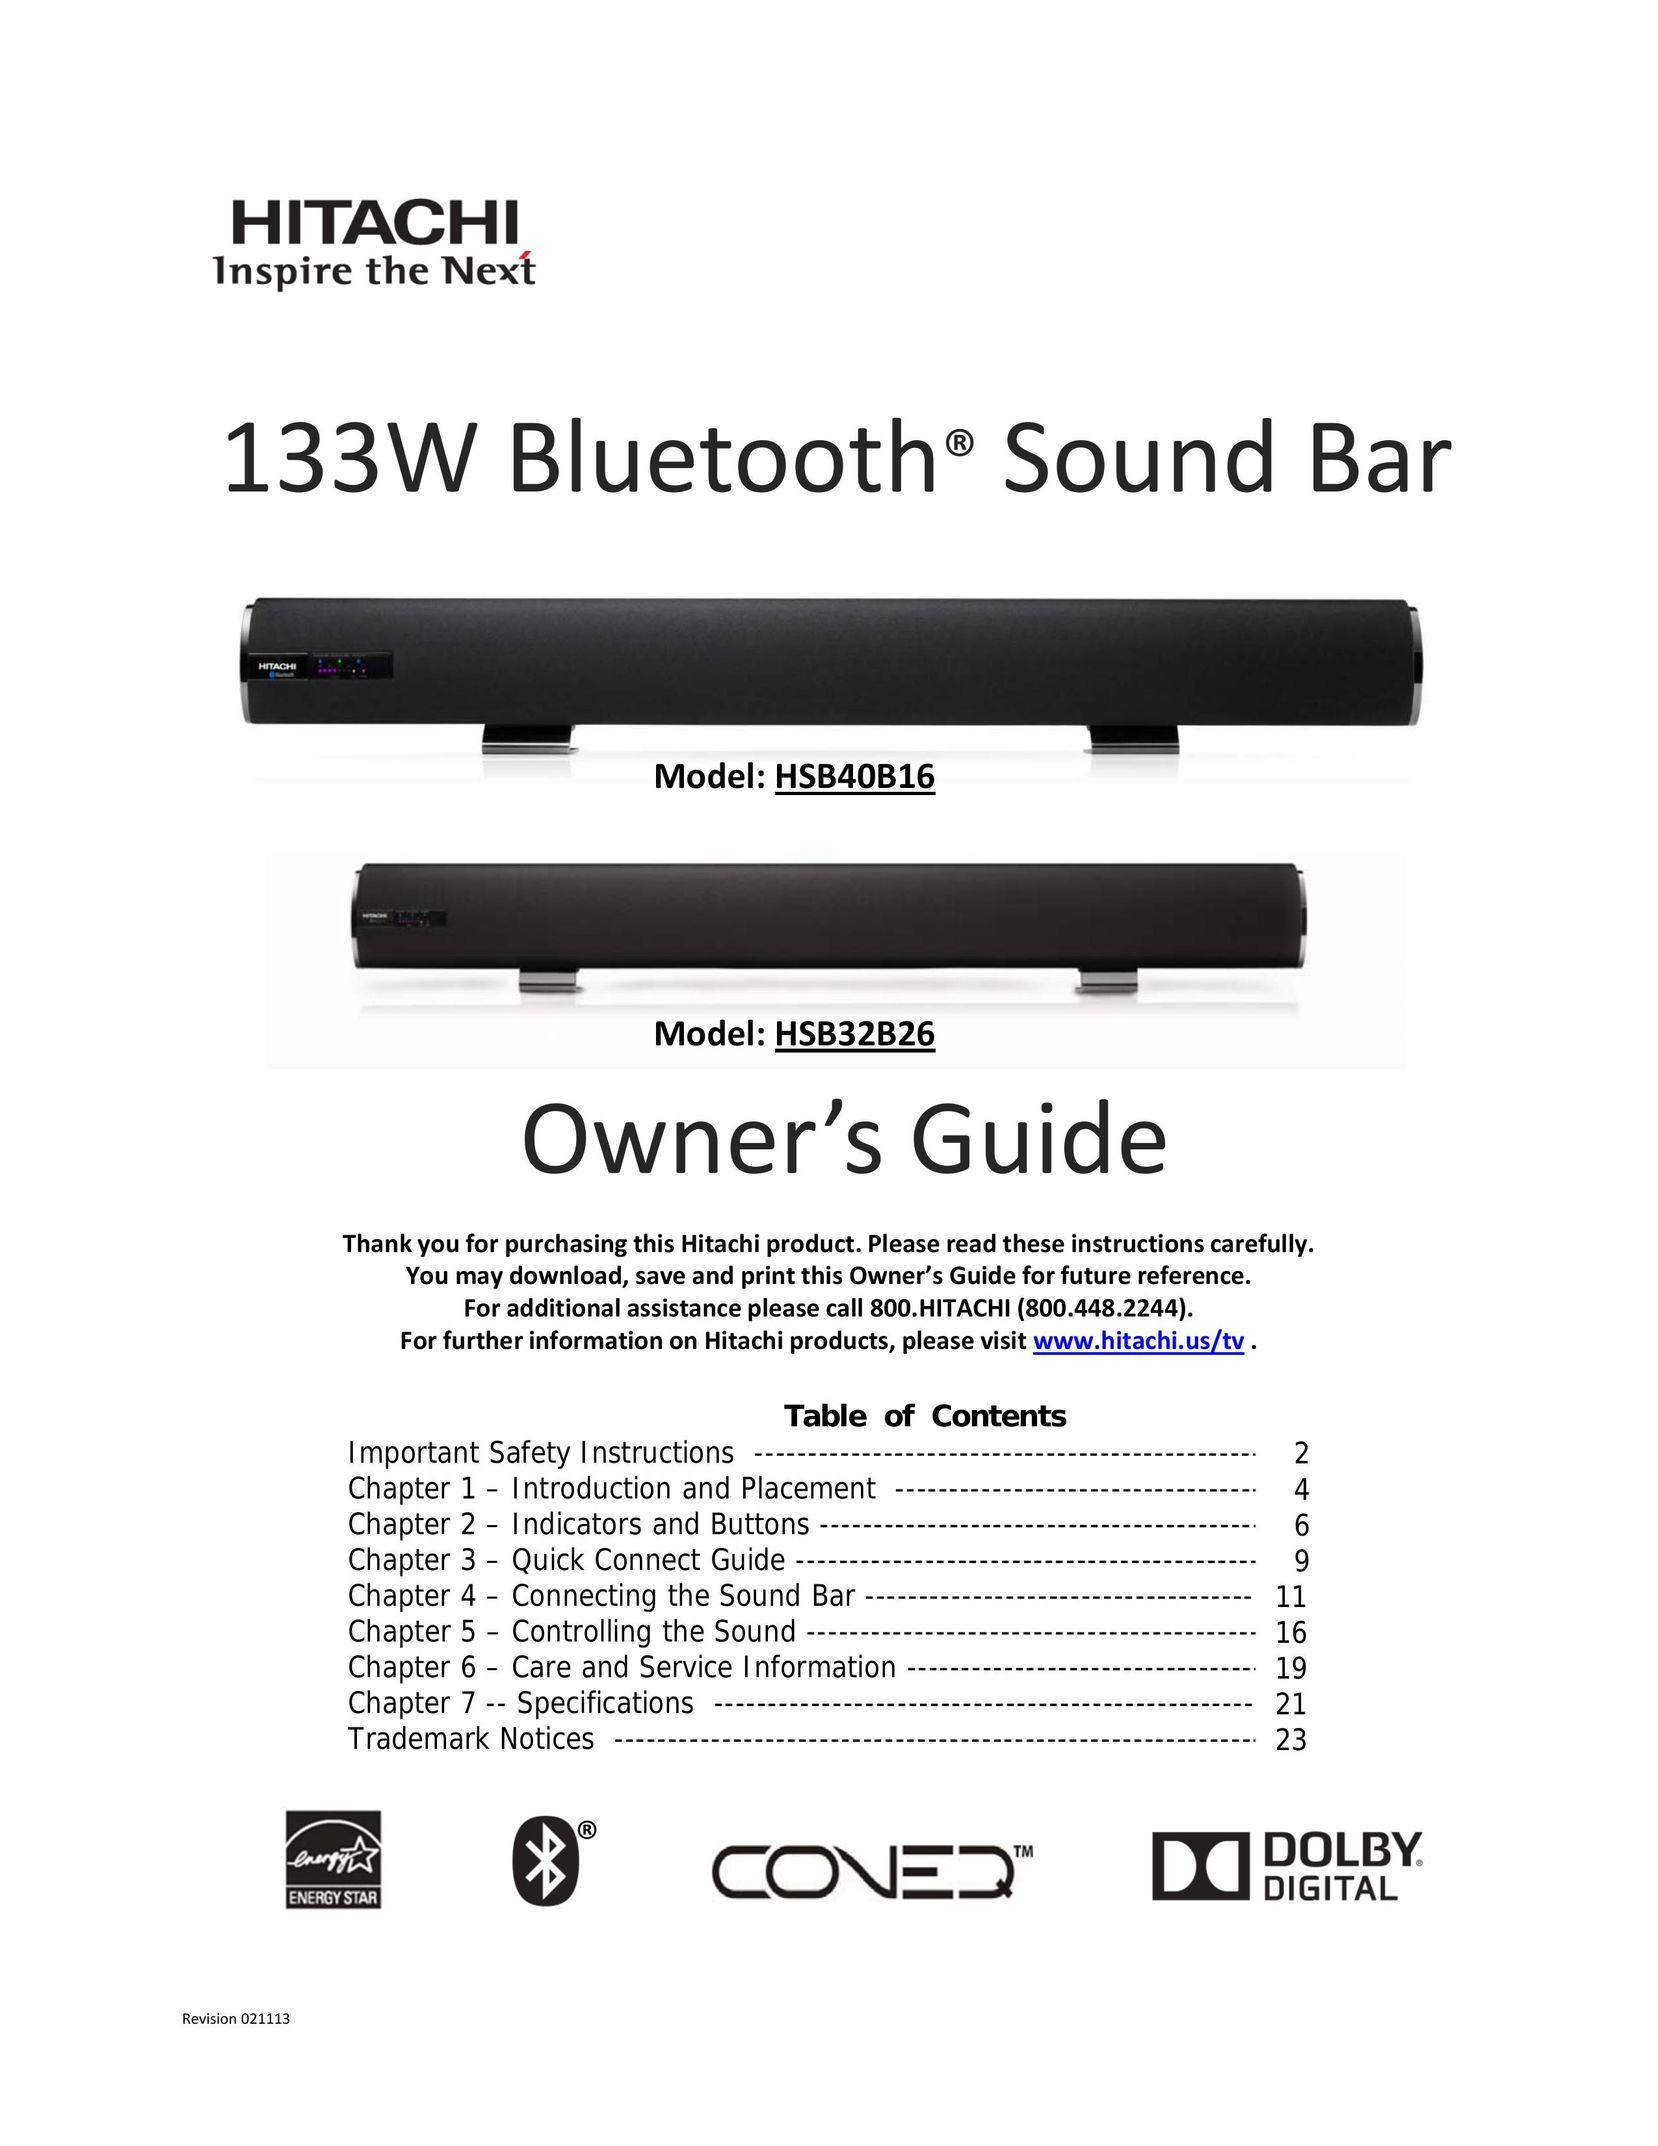 Hitachi bluetooth sound bar Home Theater System User Manual